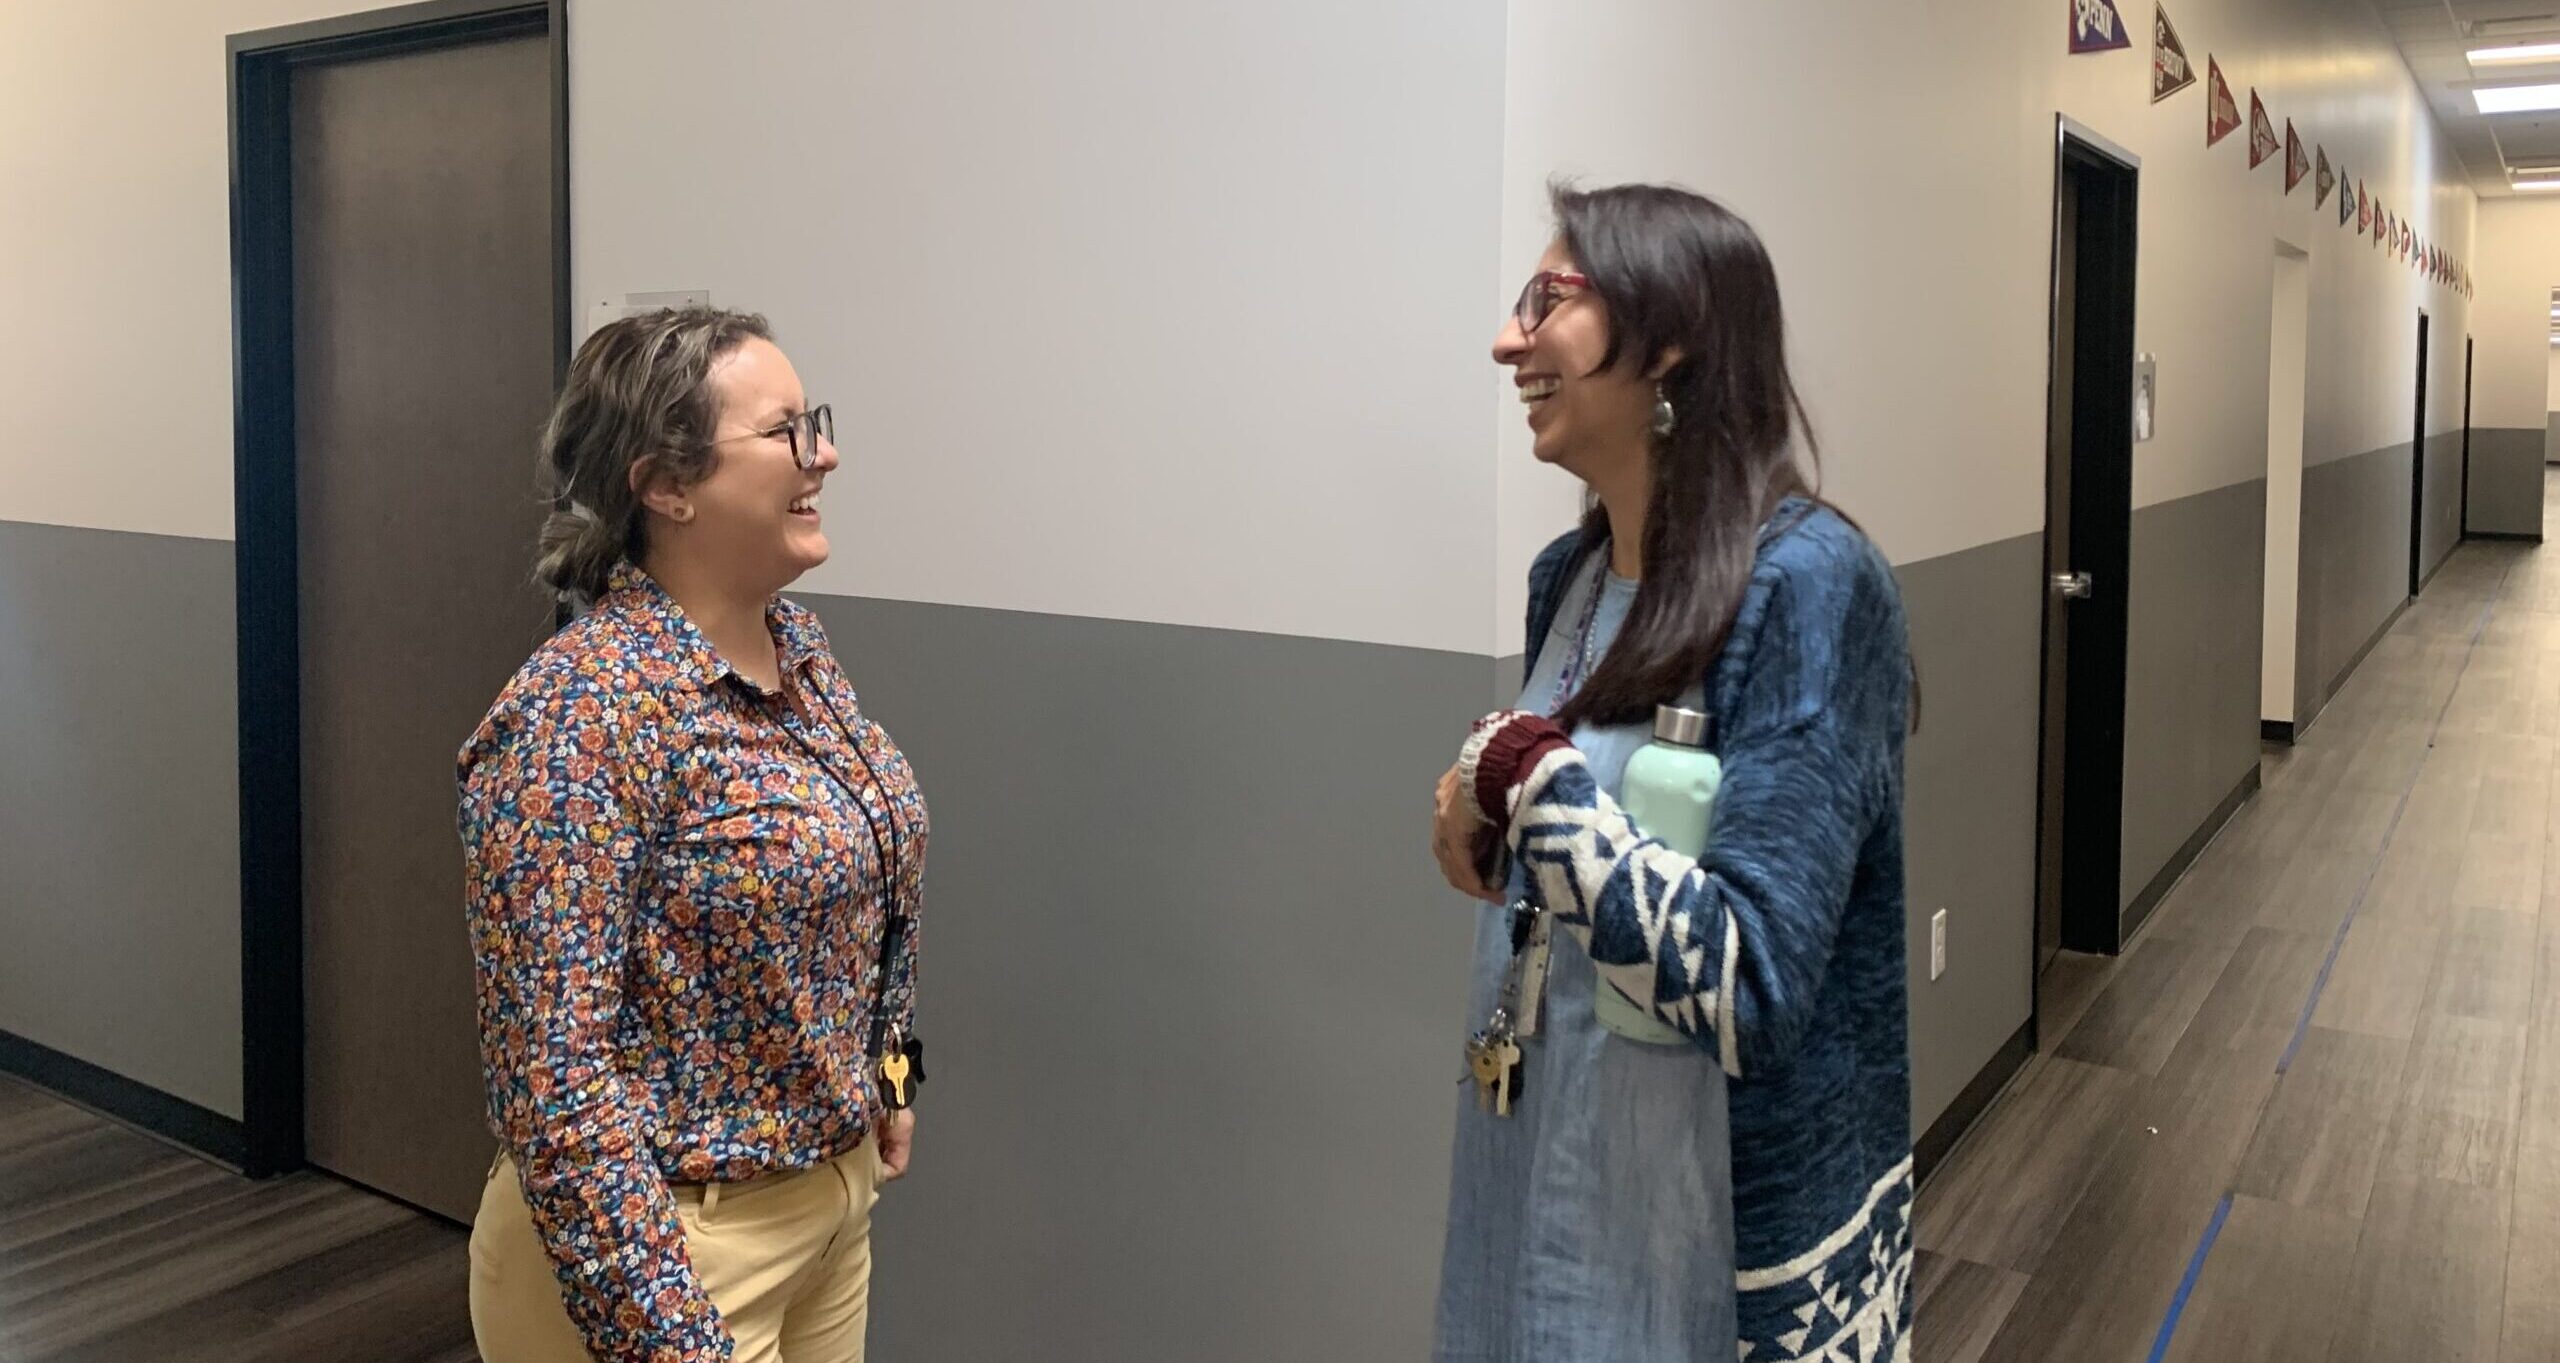 Two CASA Academy teachers meet in the hallway